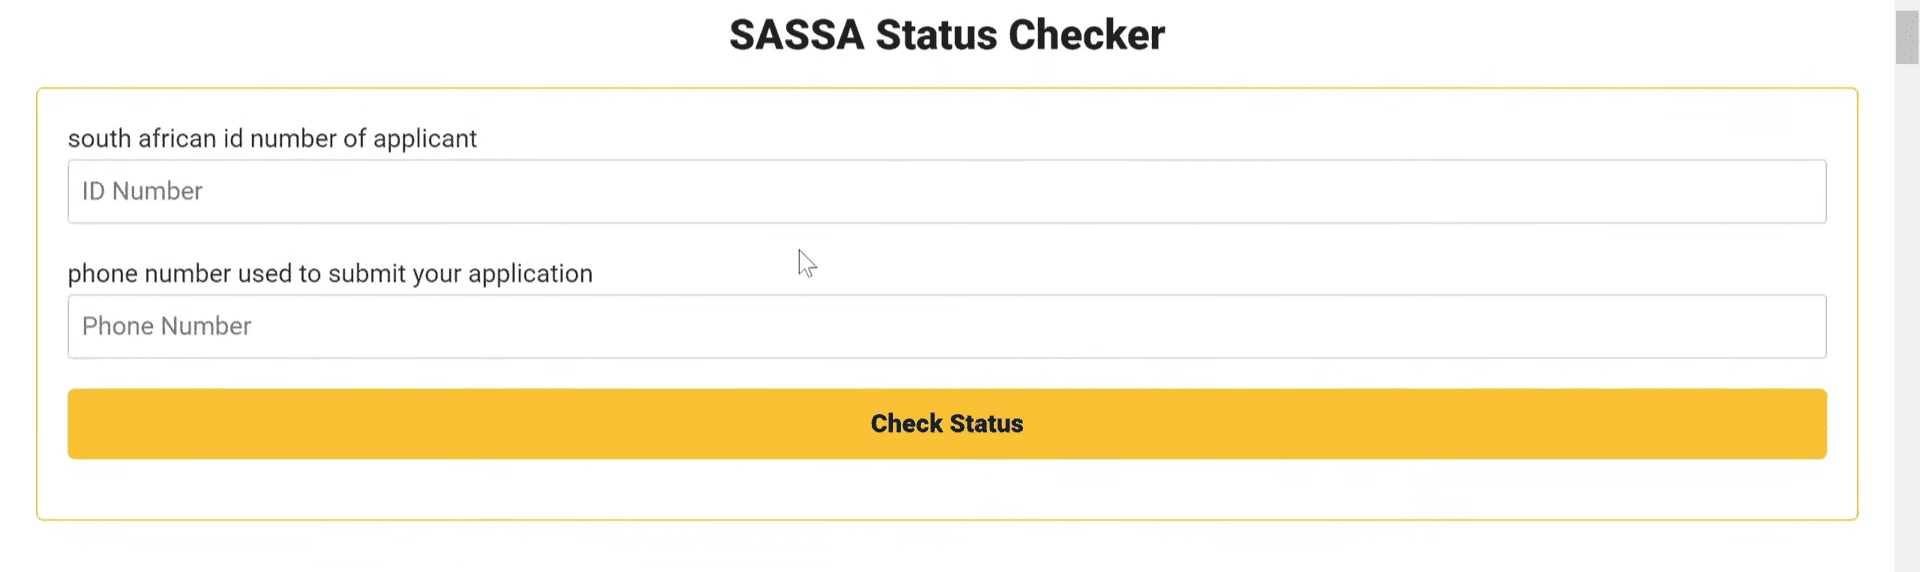 How To Perform SASSA Status Check? 